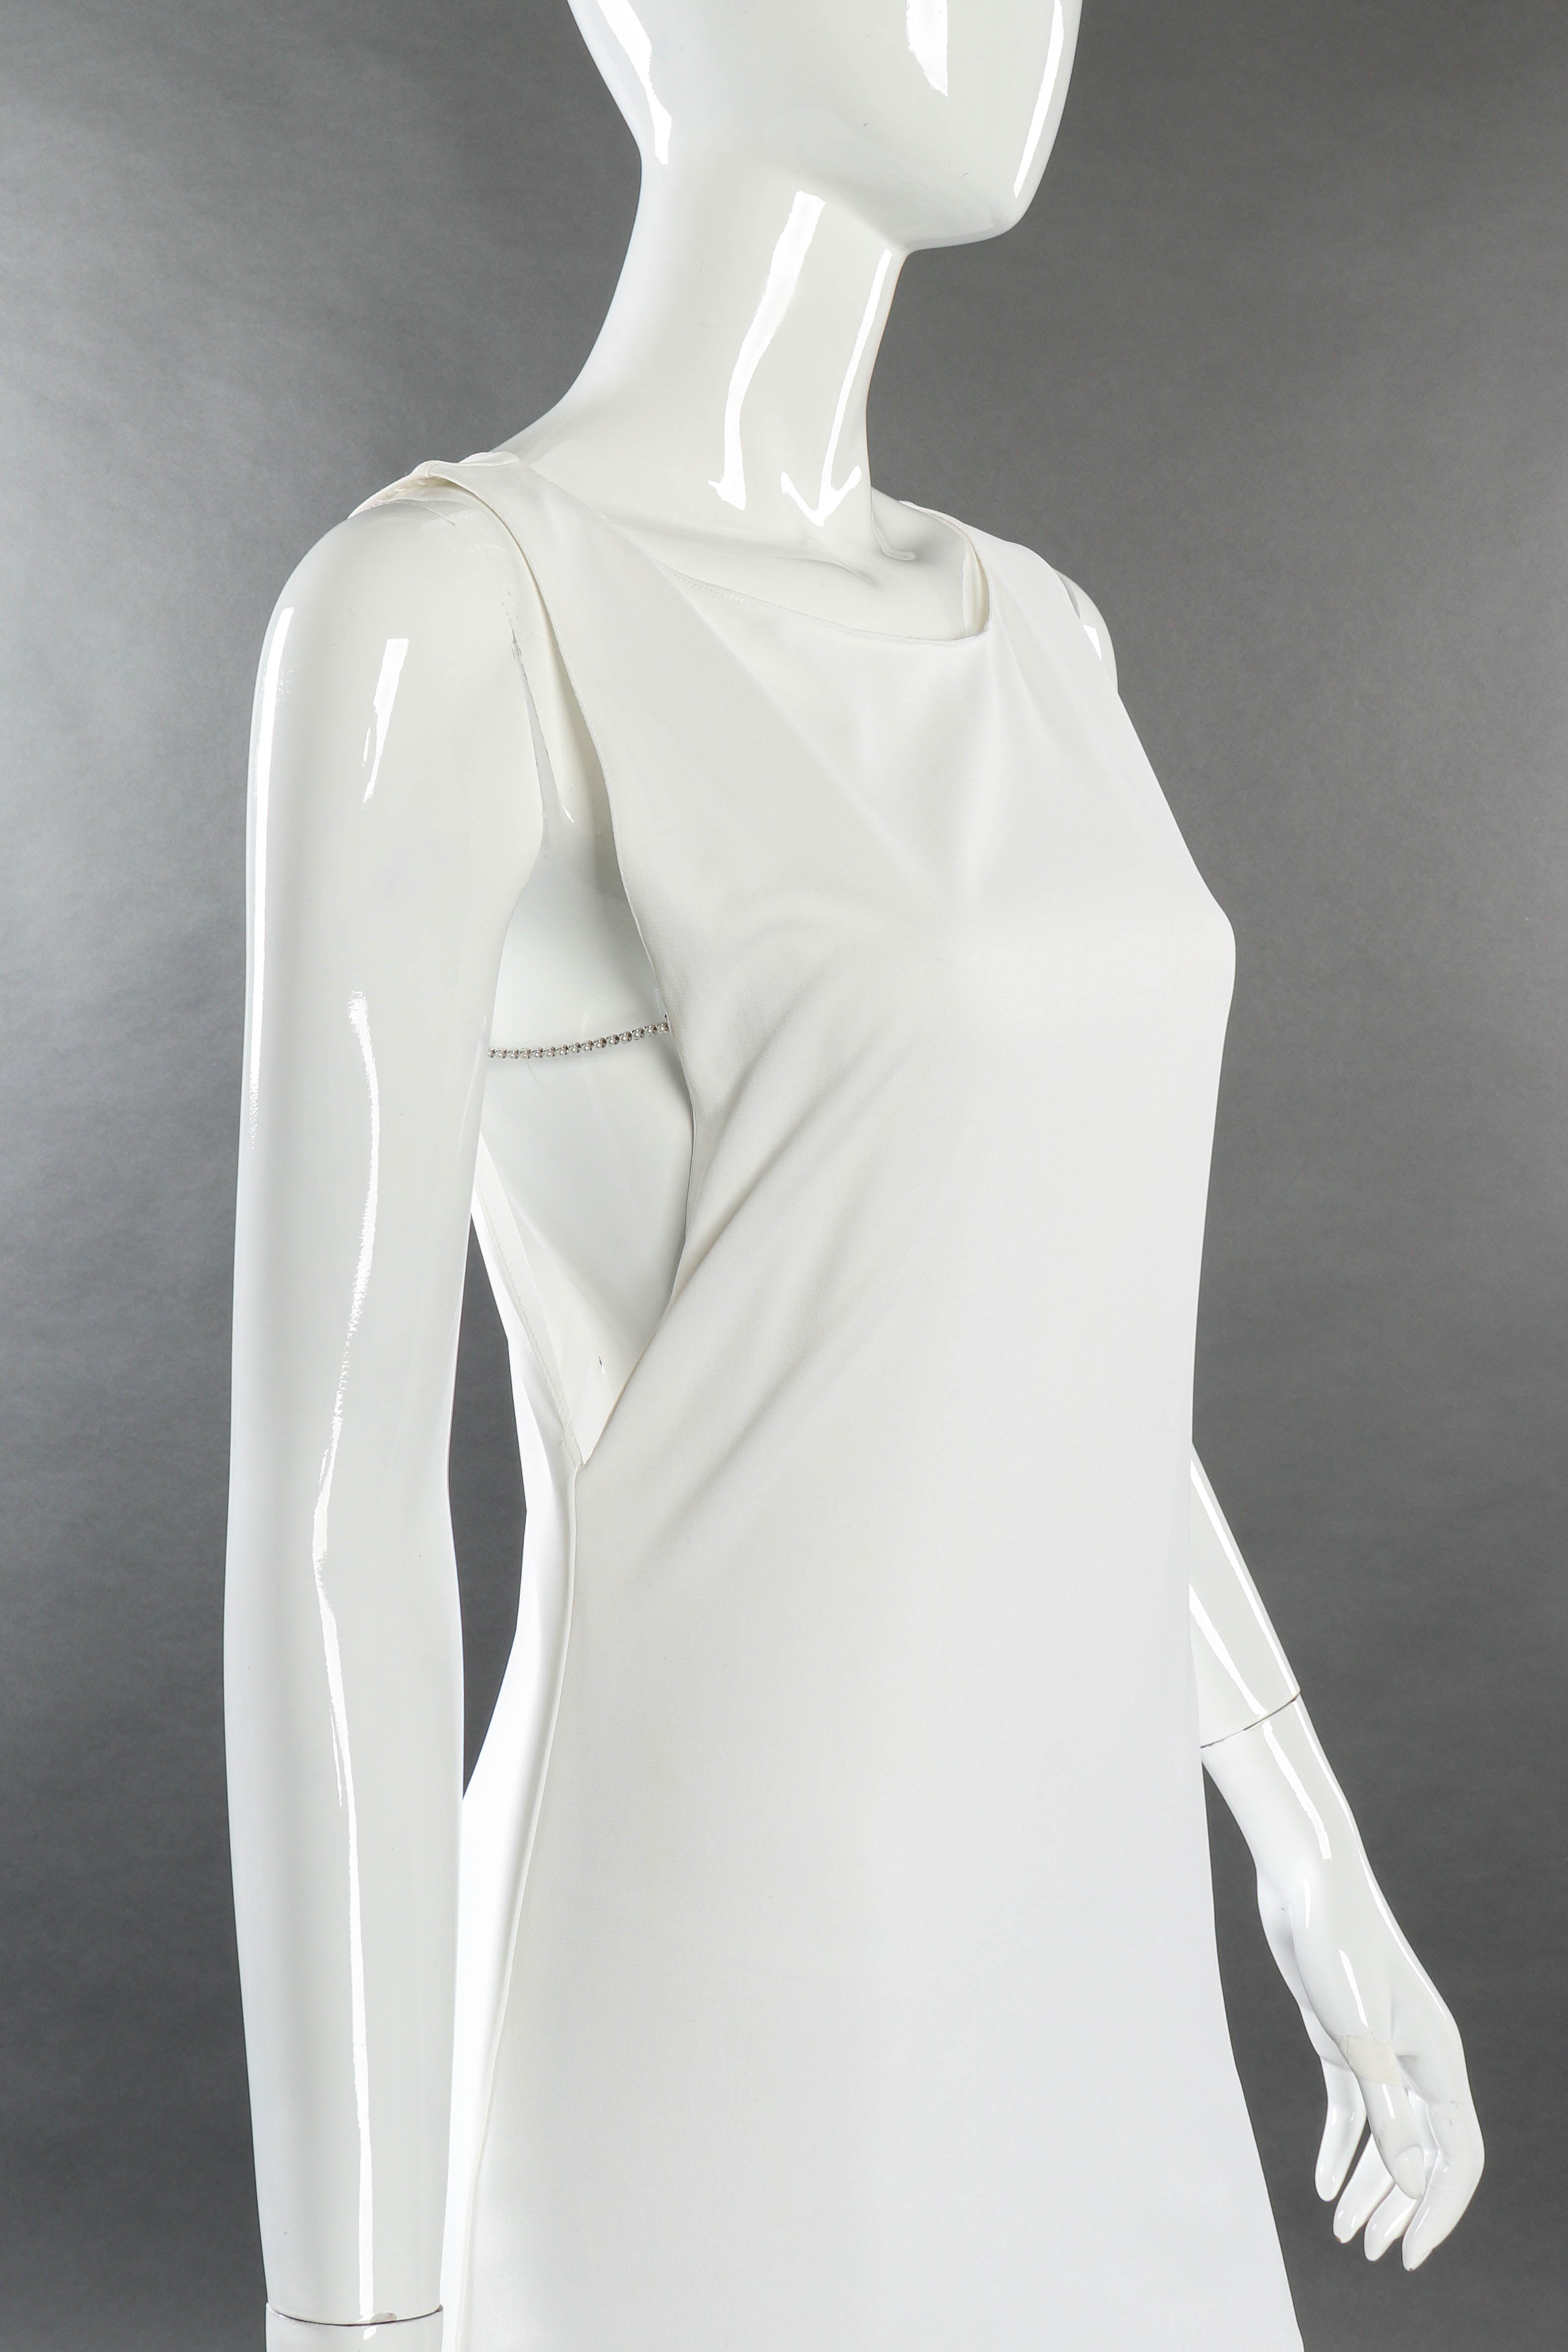 Vintage Versus Gianni Versace Crystal Cutout Sheath Dress 3/4 front on mannequin closeup @recessla